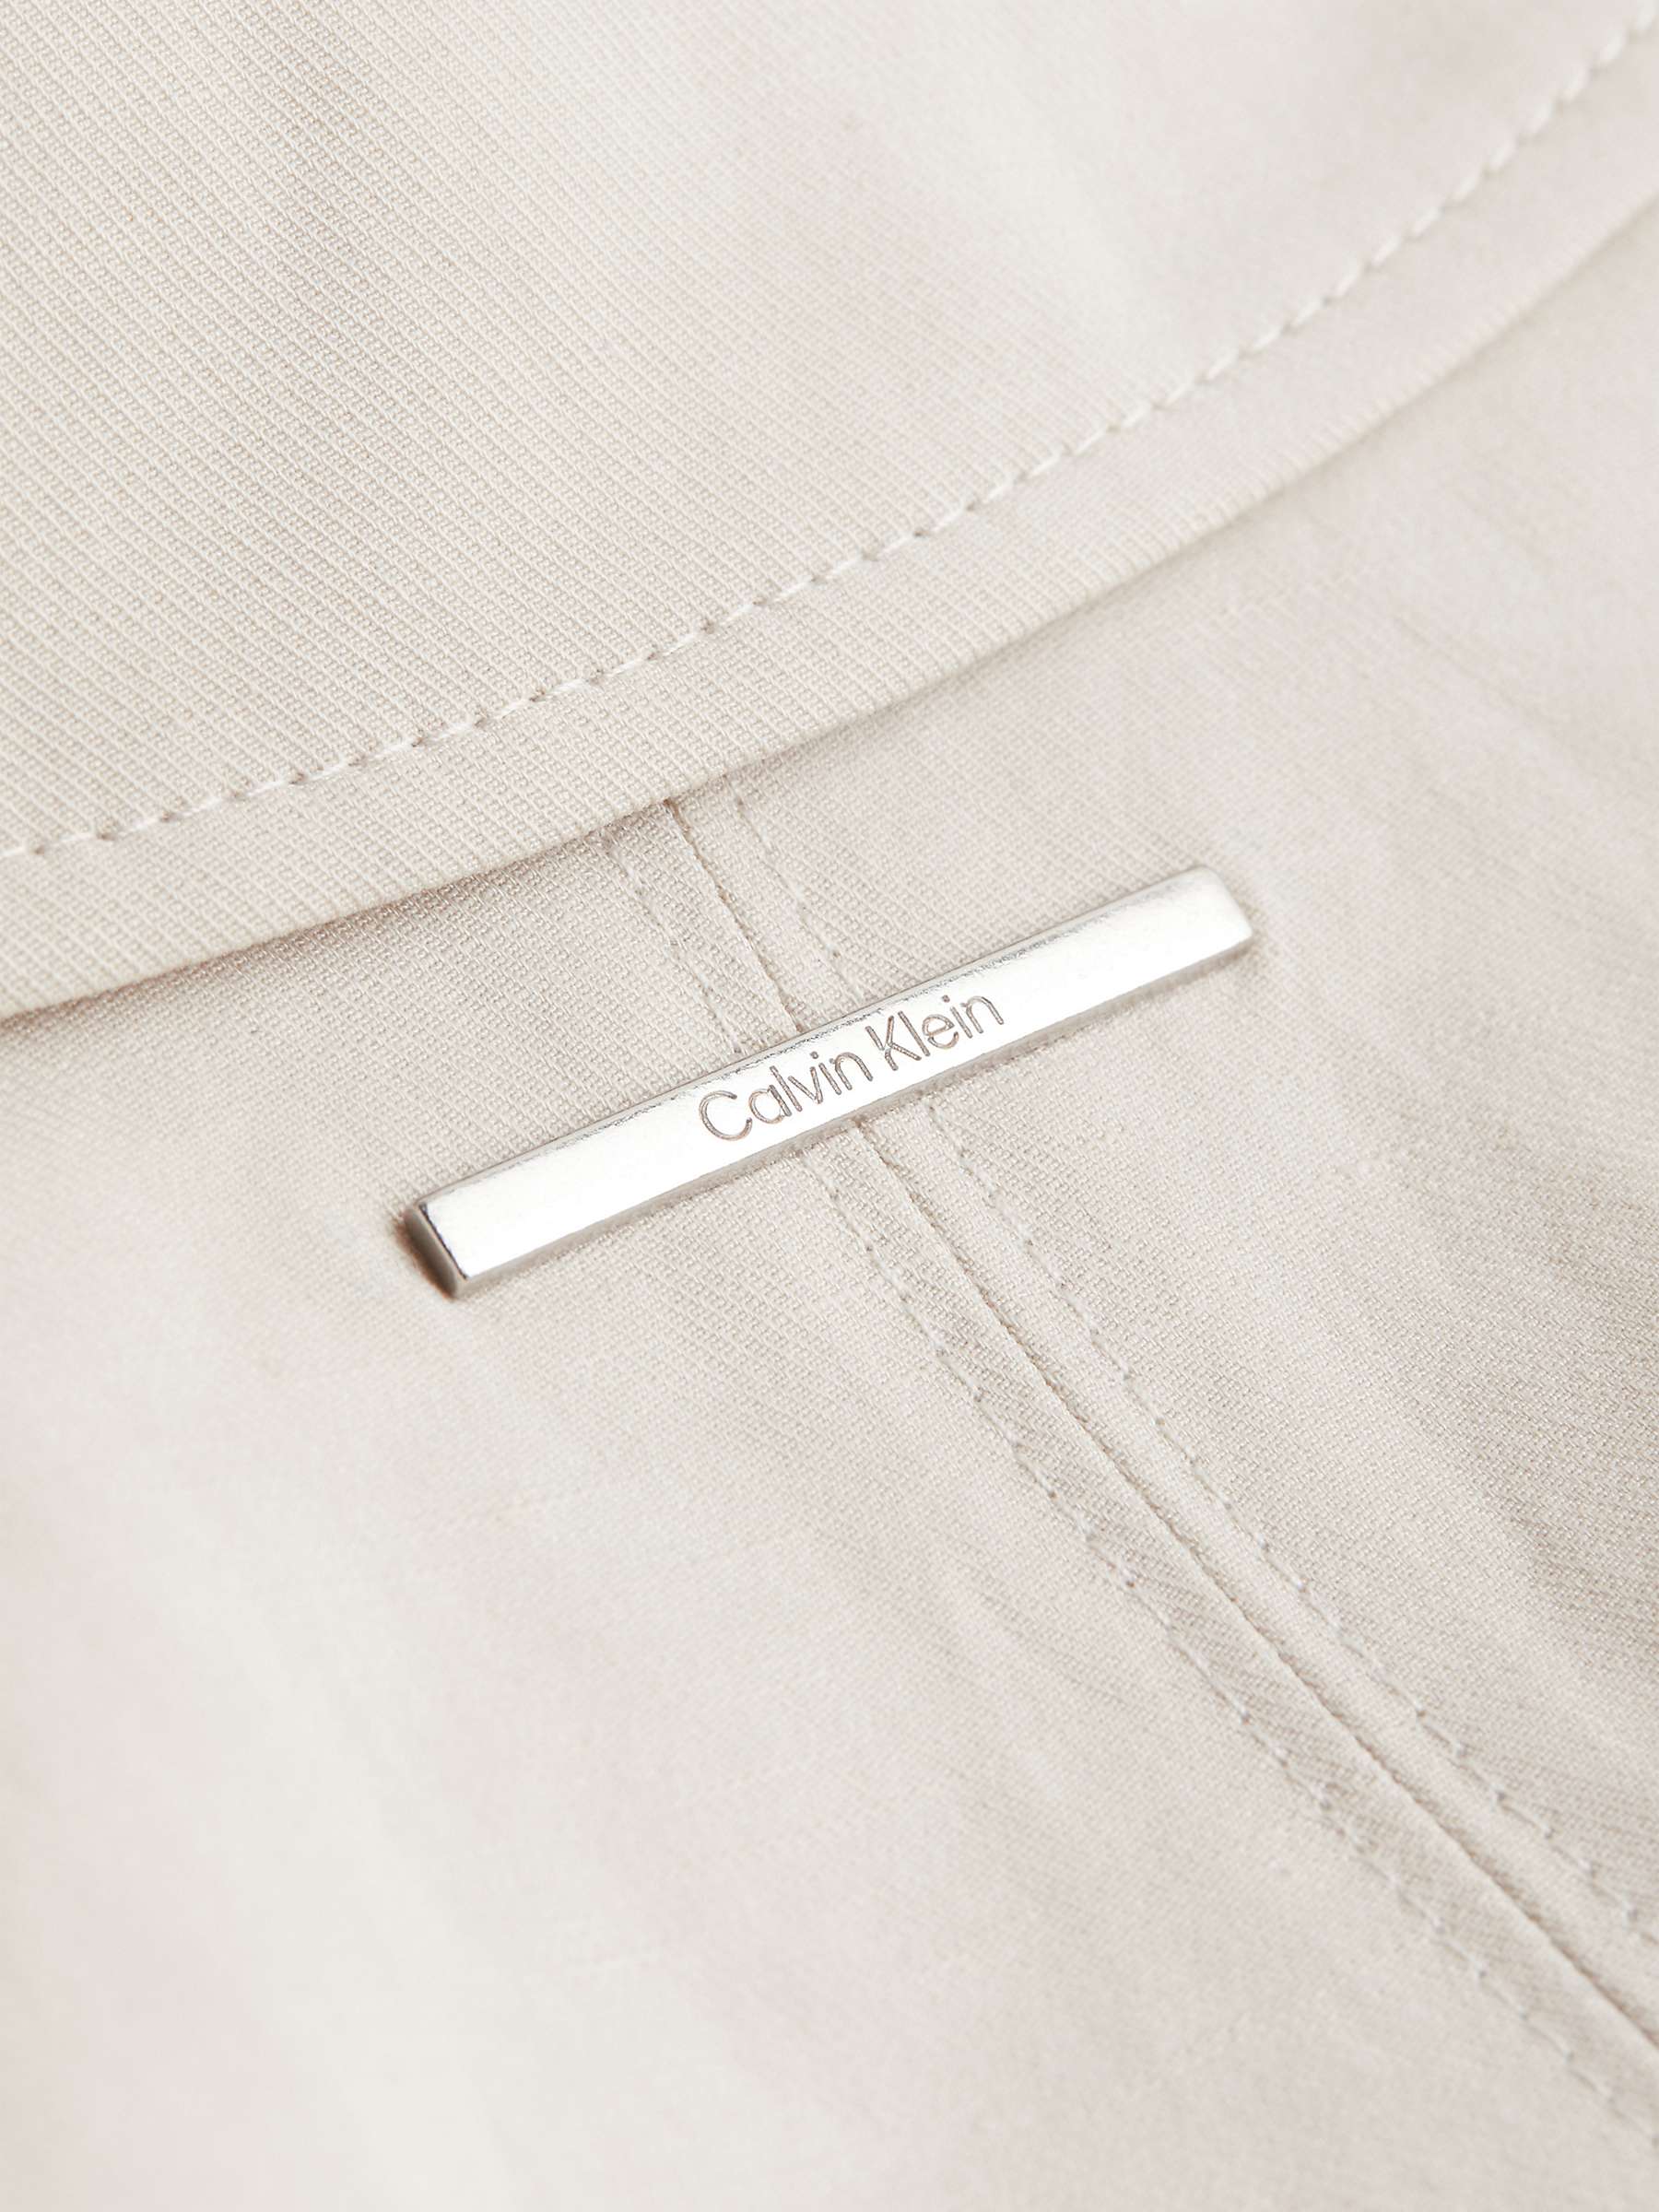 Buy Calvin Klein Linen Blend Bomber Jacket, Peyote Online at johnlewis.com